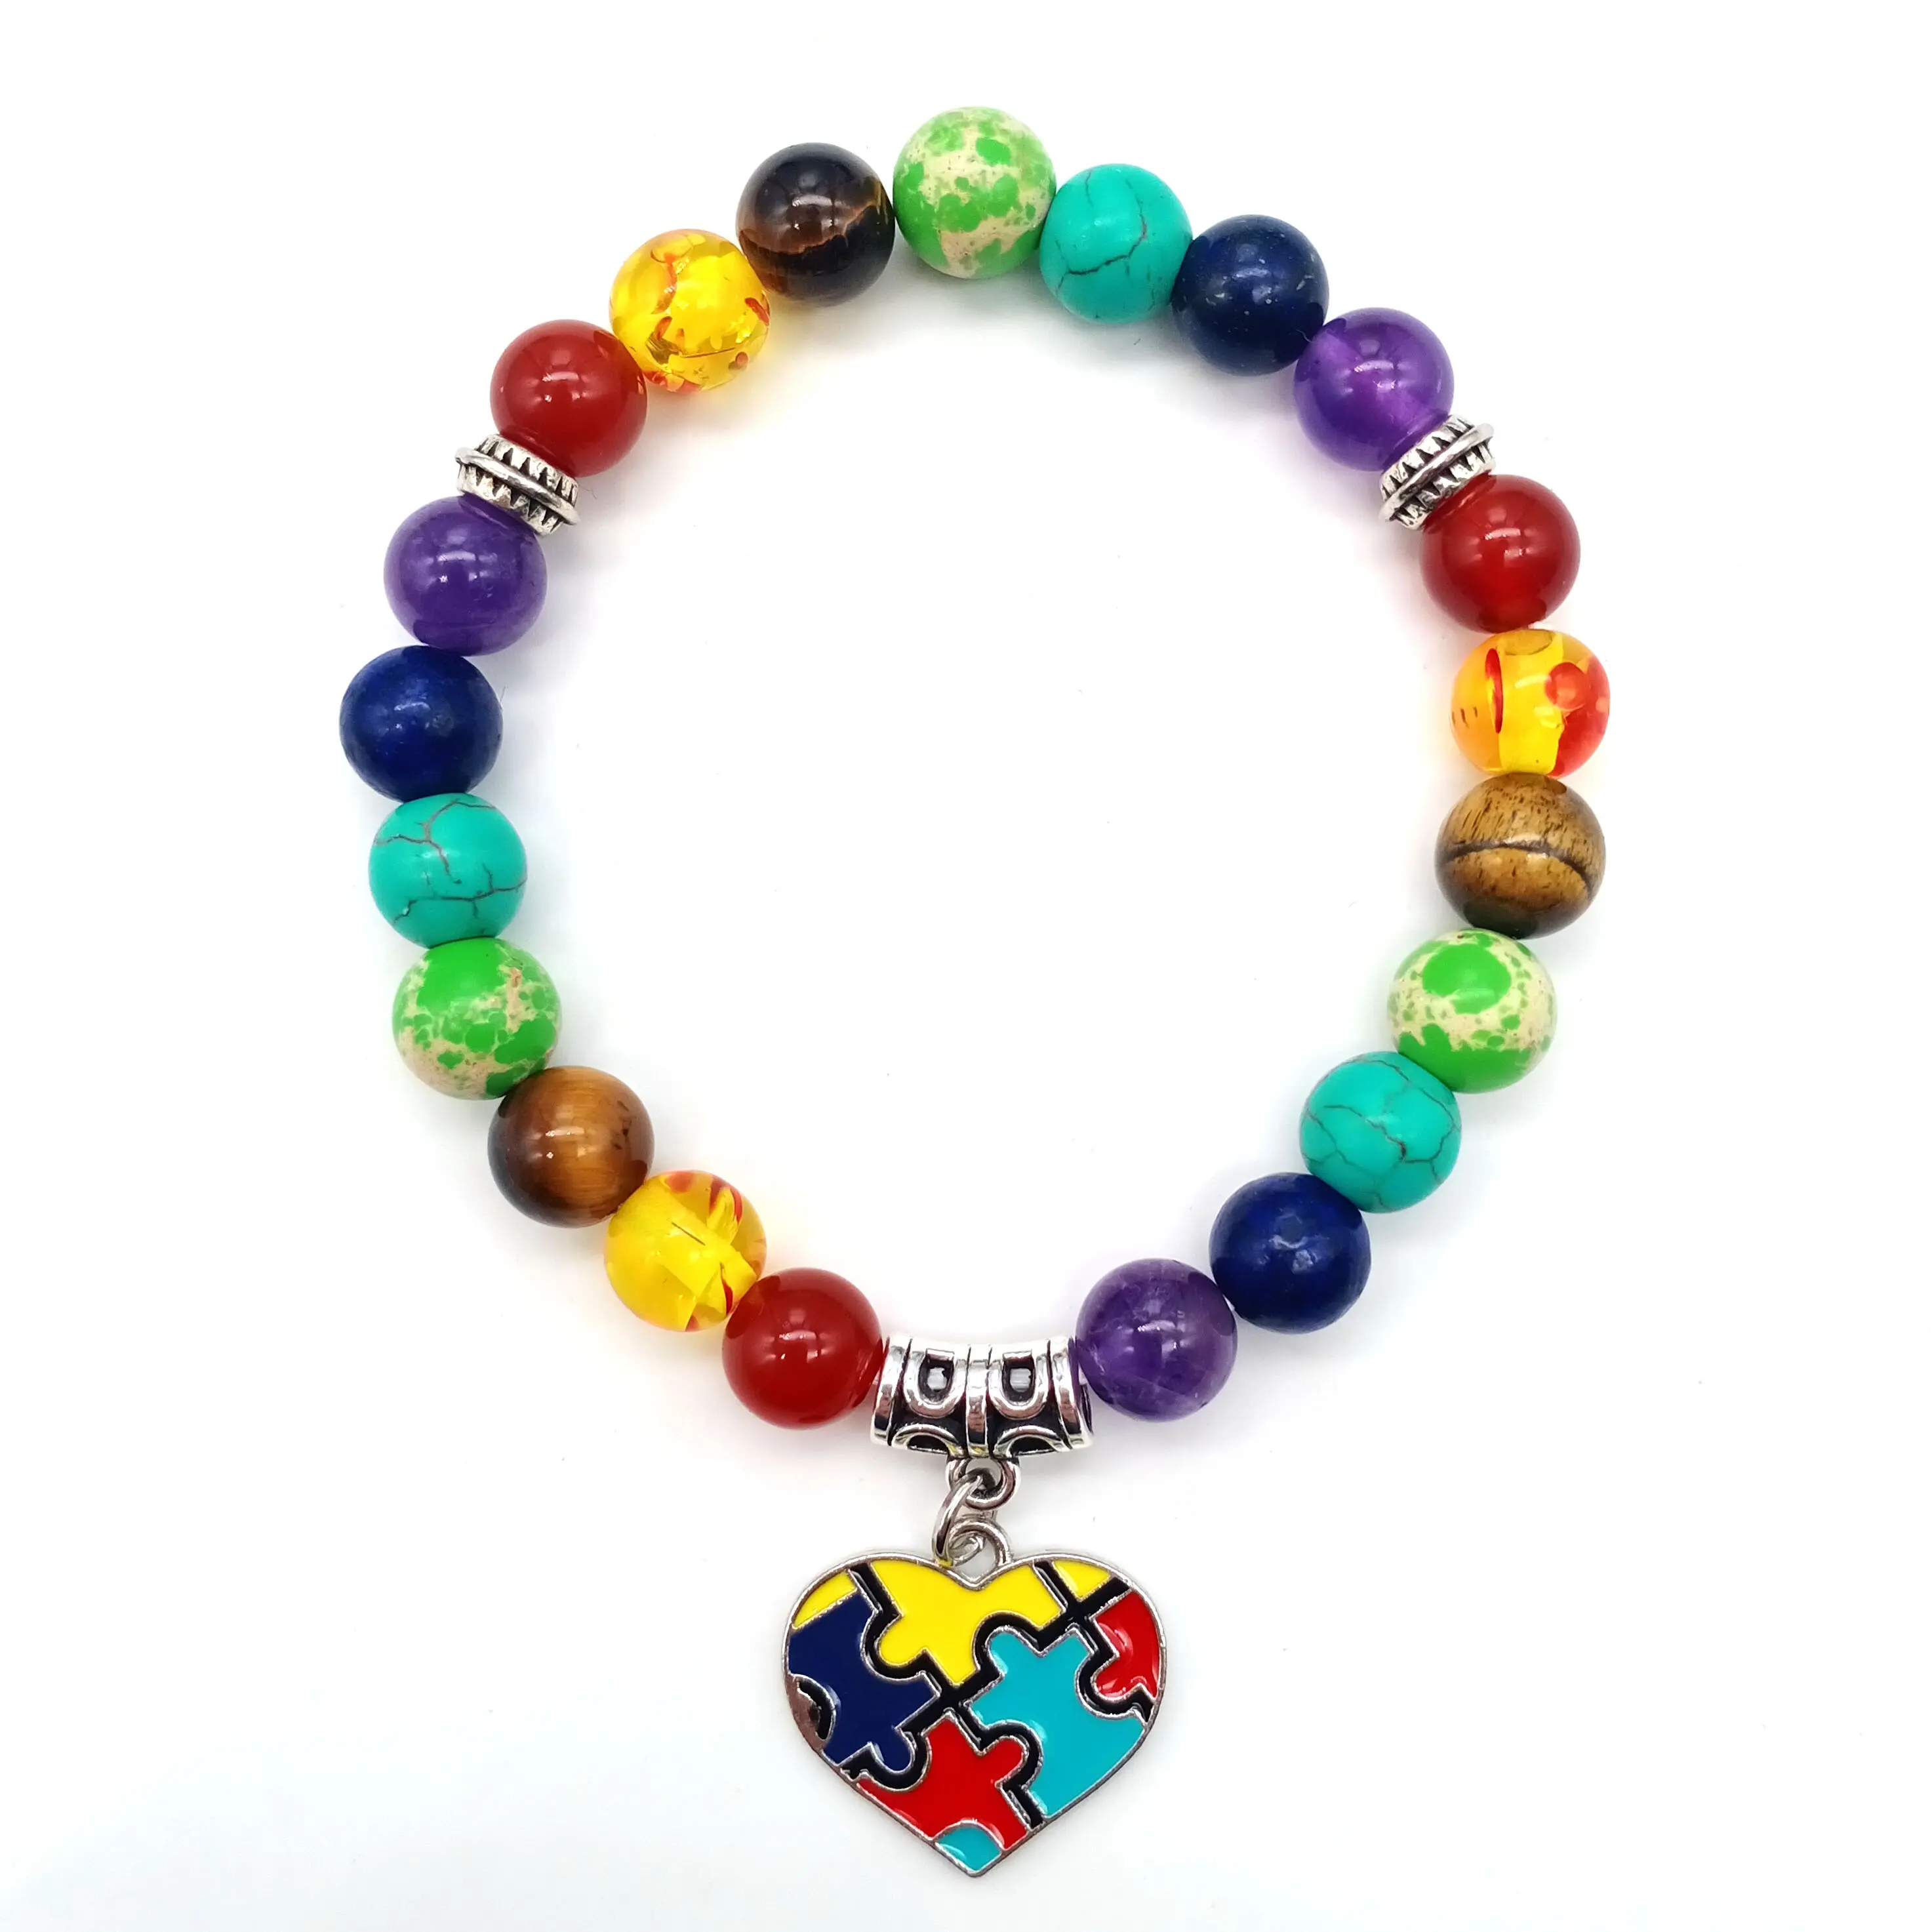 Autism Puzzle 7 Chakra Beads Elastic Bracelet Natural Stone Rainbow Autism Awareness Jewelry Gift for autistic patients